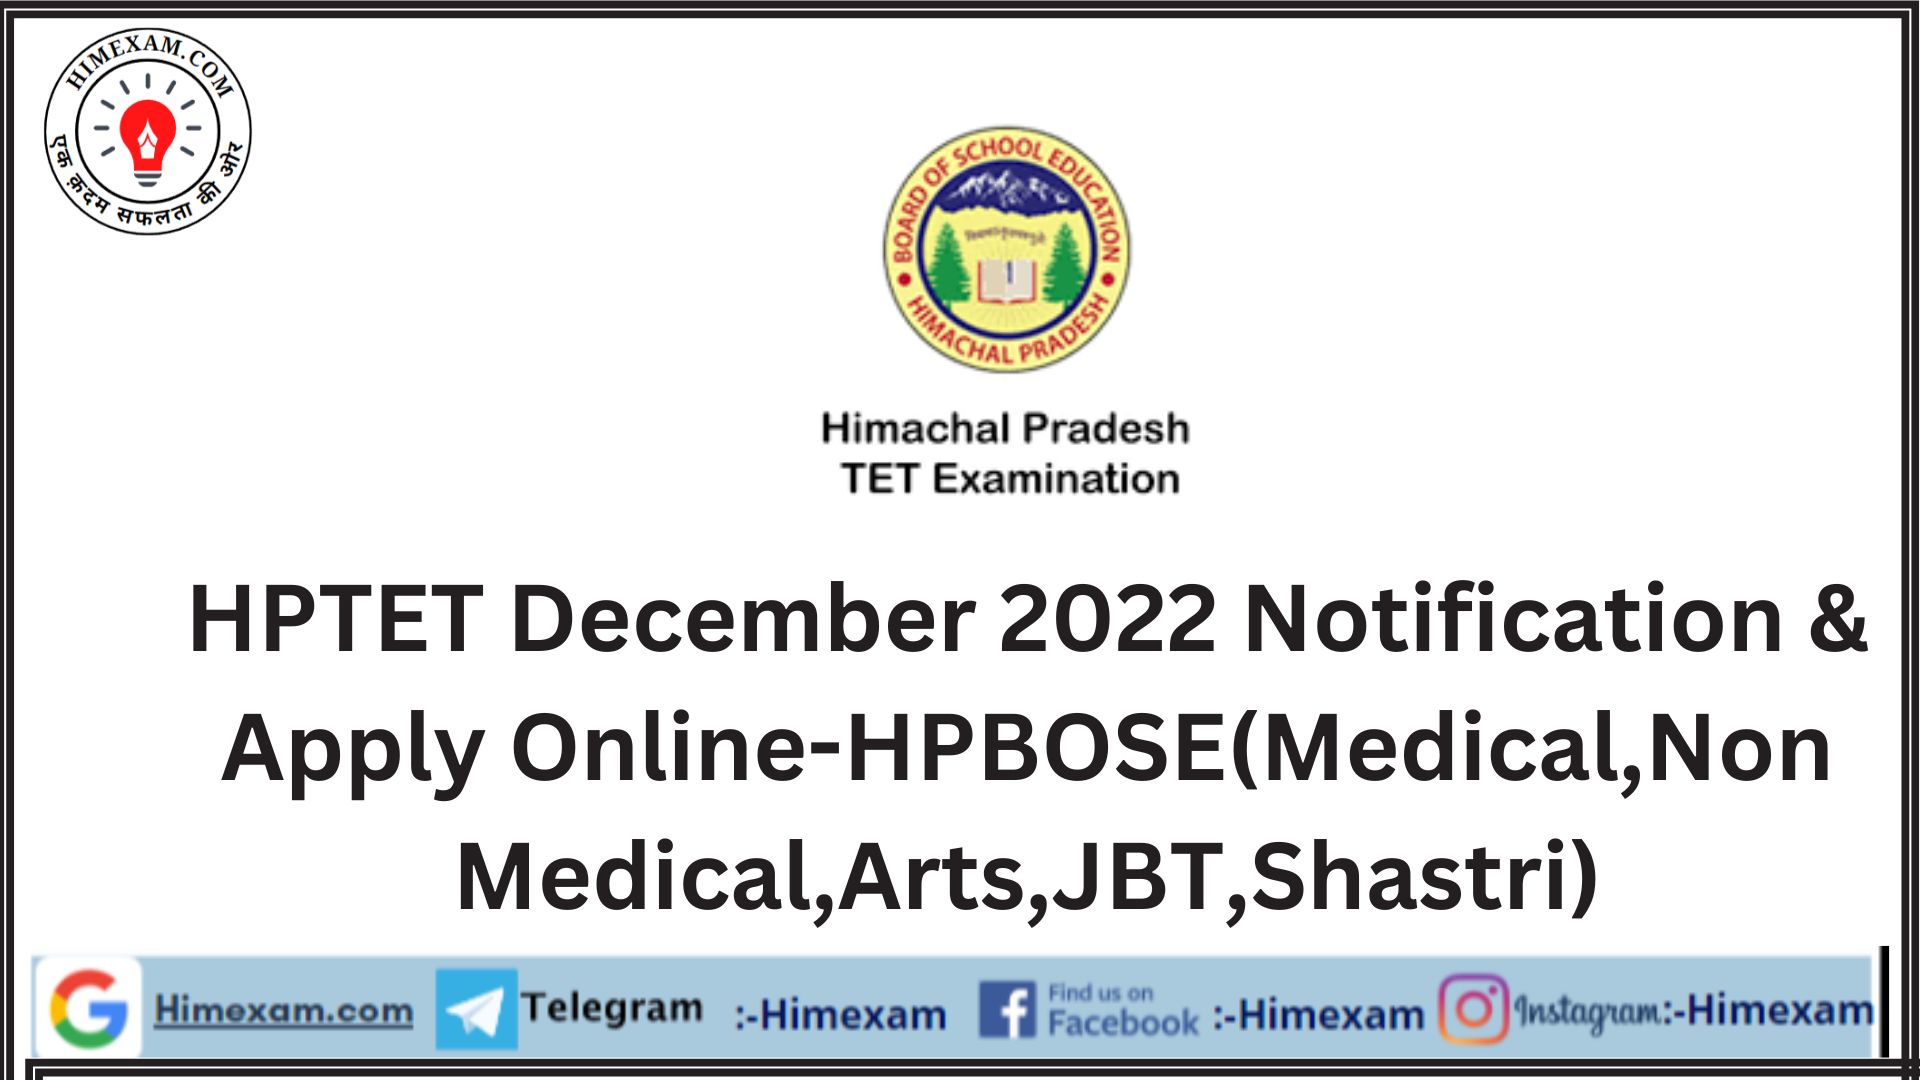 HPTET December 2022 Notification & Apply Online-HPBOSE(Medical,Non Medical,Arts,JBT,Shastri)